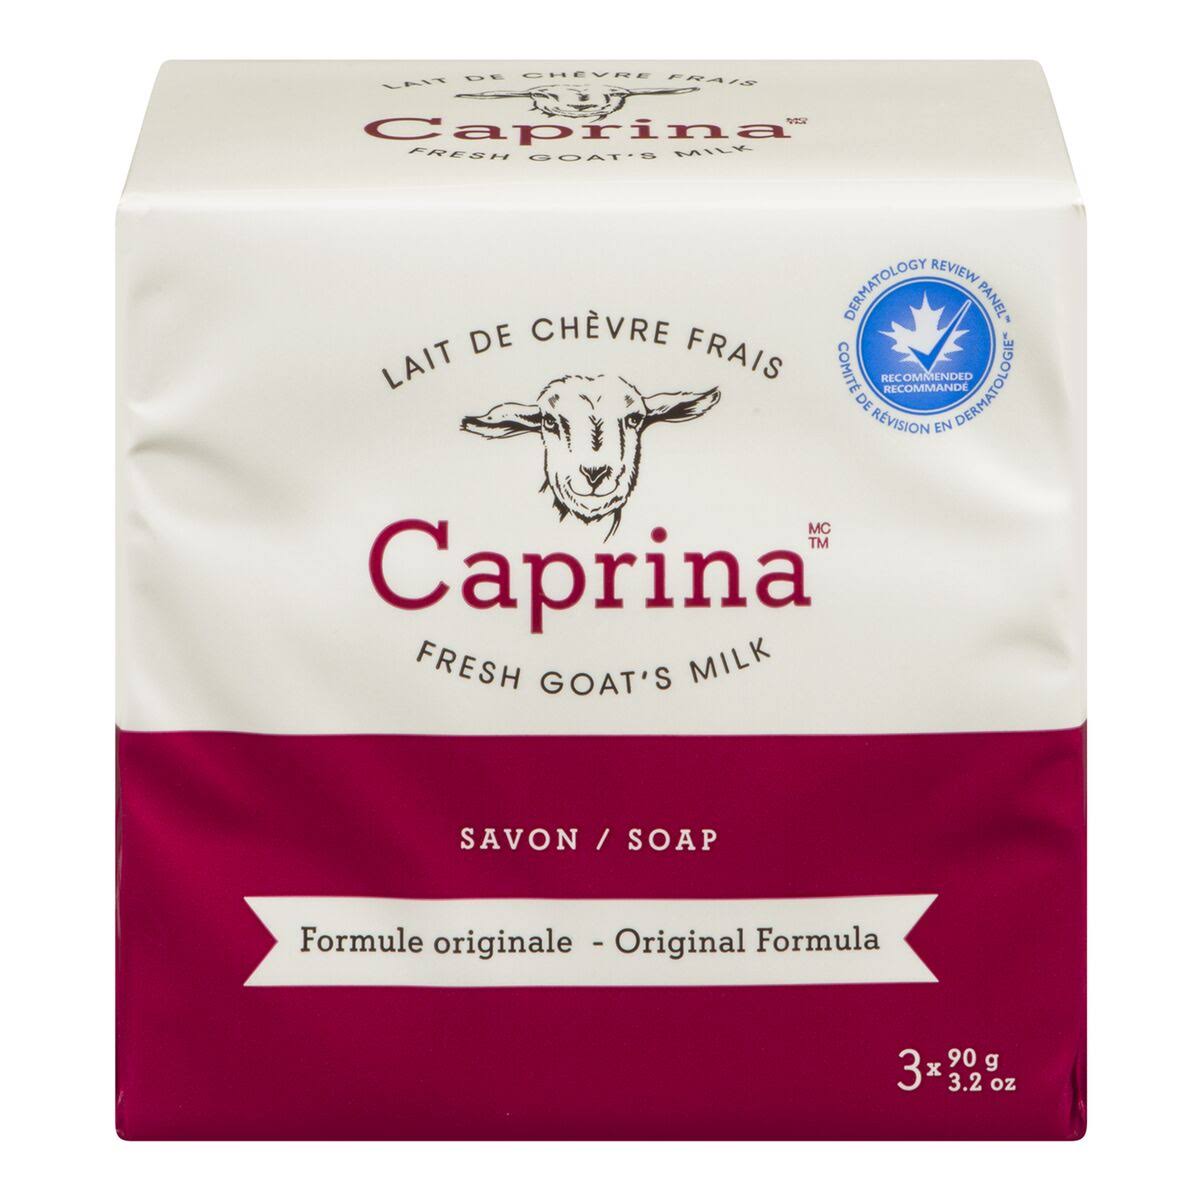 Caprina by Canus Fresh Goat's Milk Soap - 3.2oz